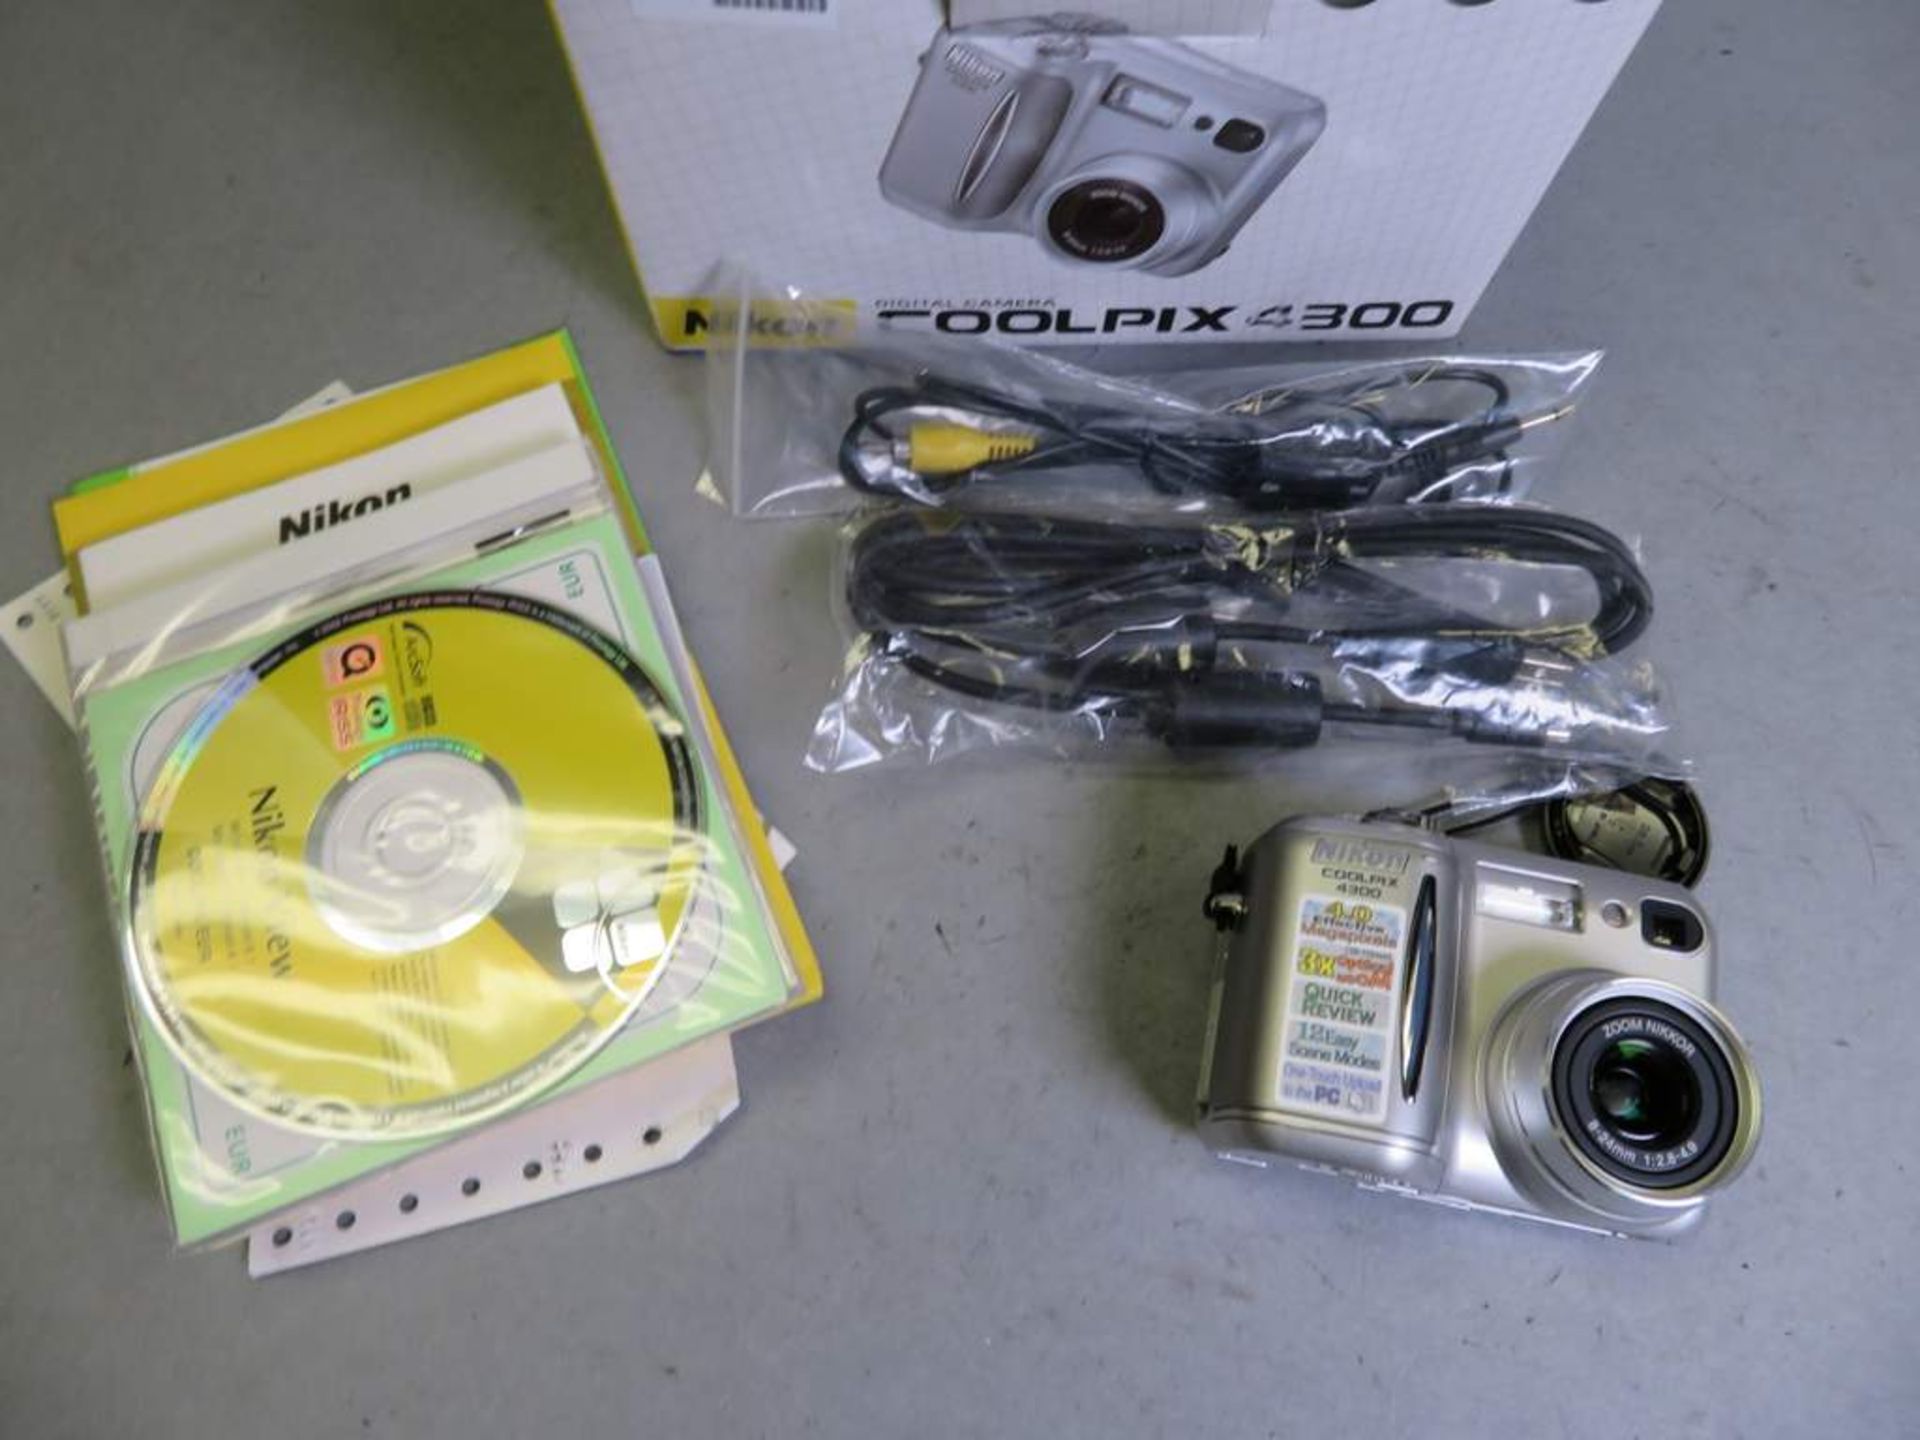 Nikon Coolpix 4300 digital camera - Image 2 of 6